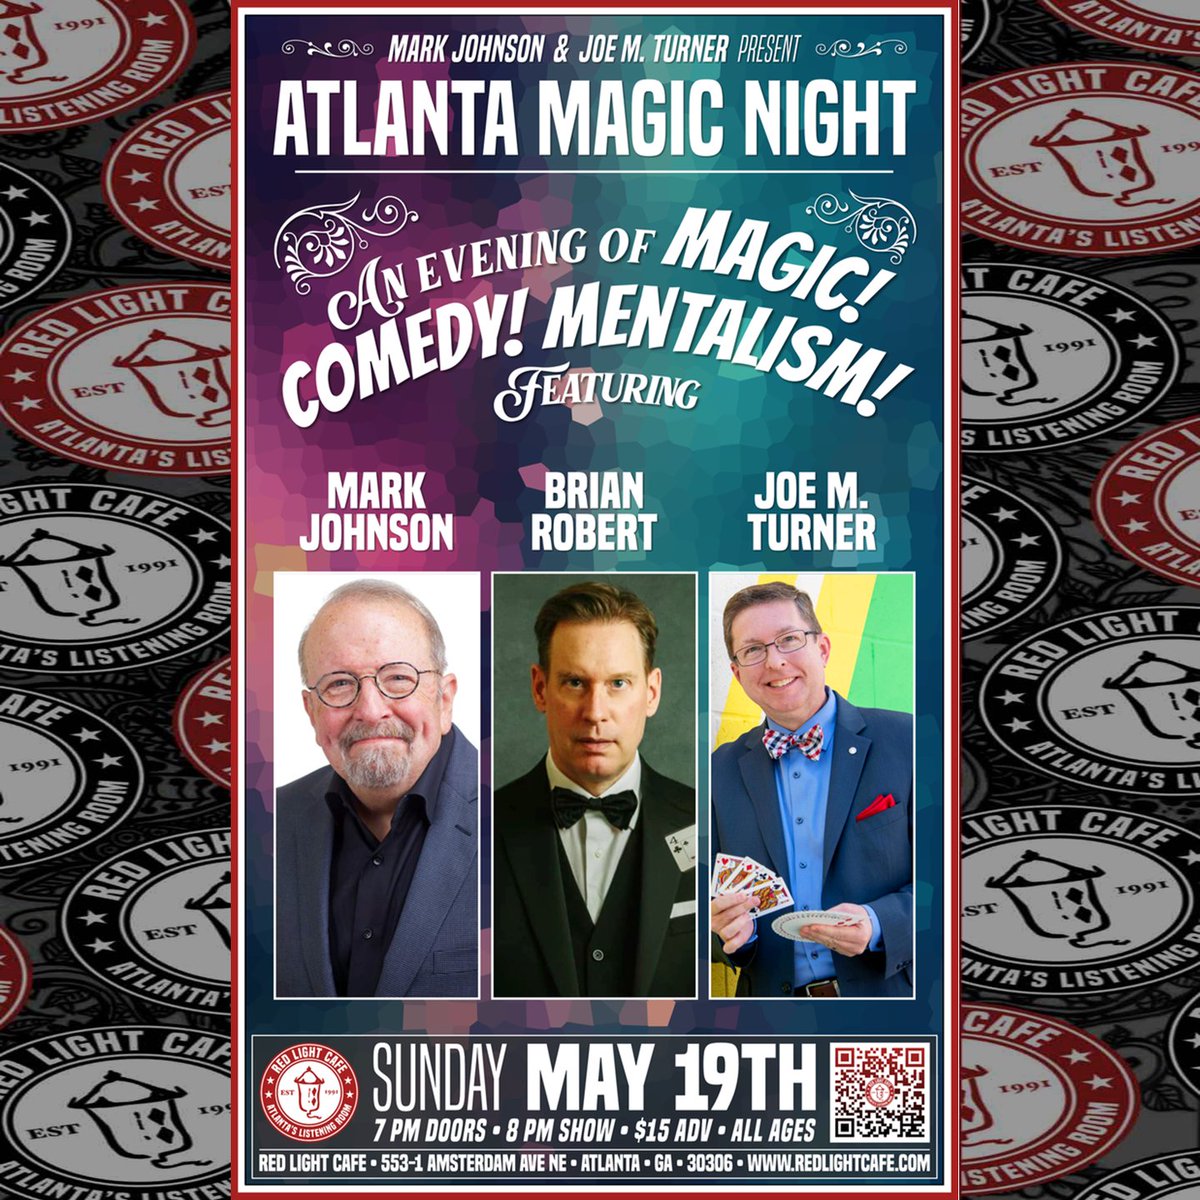 It's Wednesday already. Got your ticket for Sunday? SUNDAY: Atlanta Magic Night's 10 YEAR CELEBRATION -- 8pm at Red Light Cafe! eventbrite.com/e/atlanta-magi… #atlanta #magic #magician #magicians #mentalism #mentalist #mindreader #atlmagicshow #atlantamagicnight #theatre #comedy